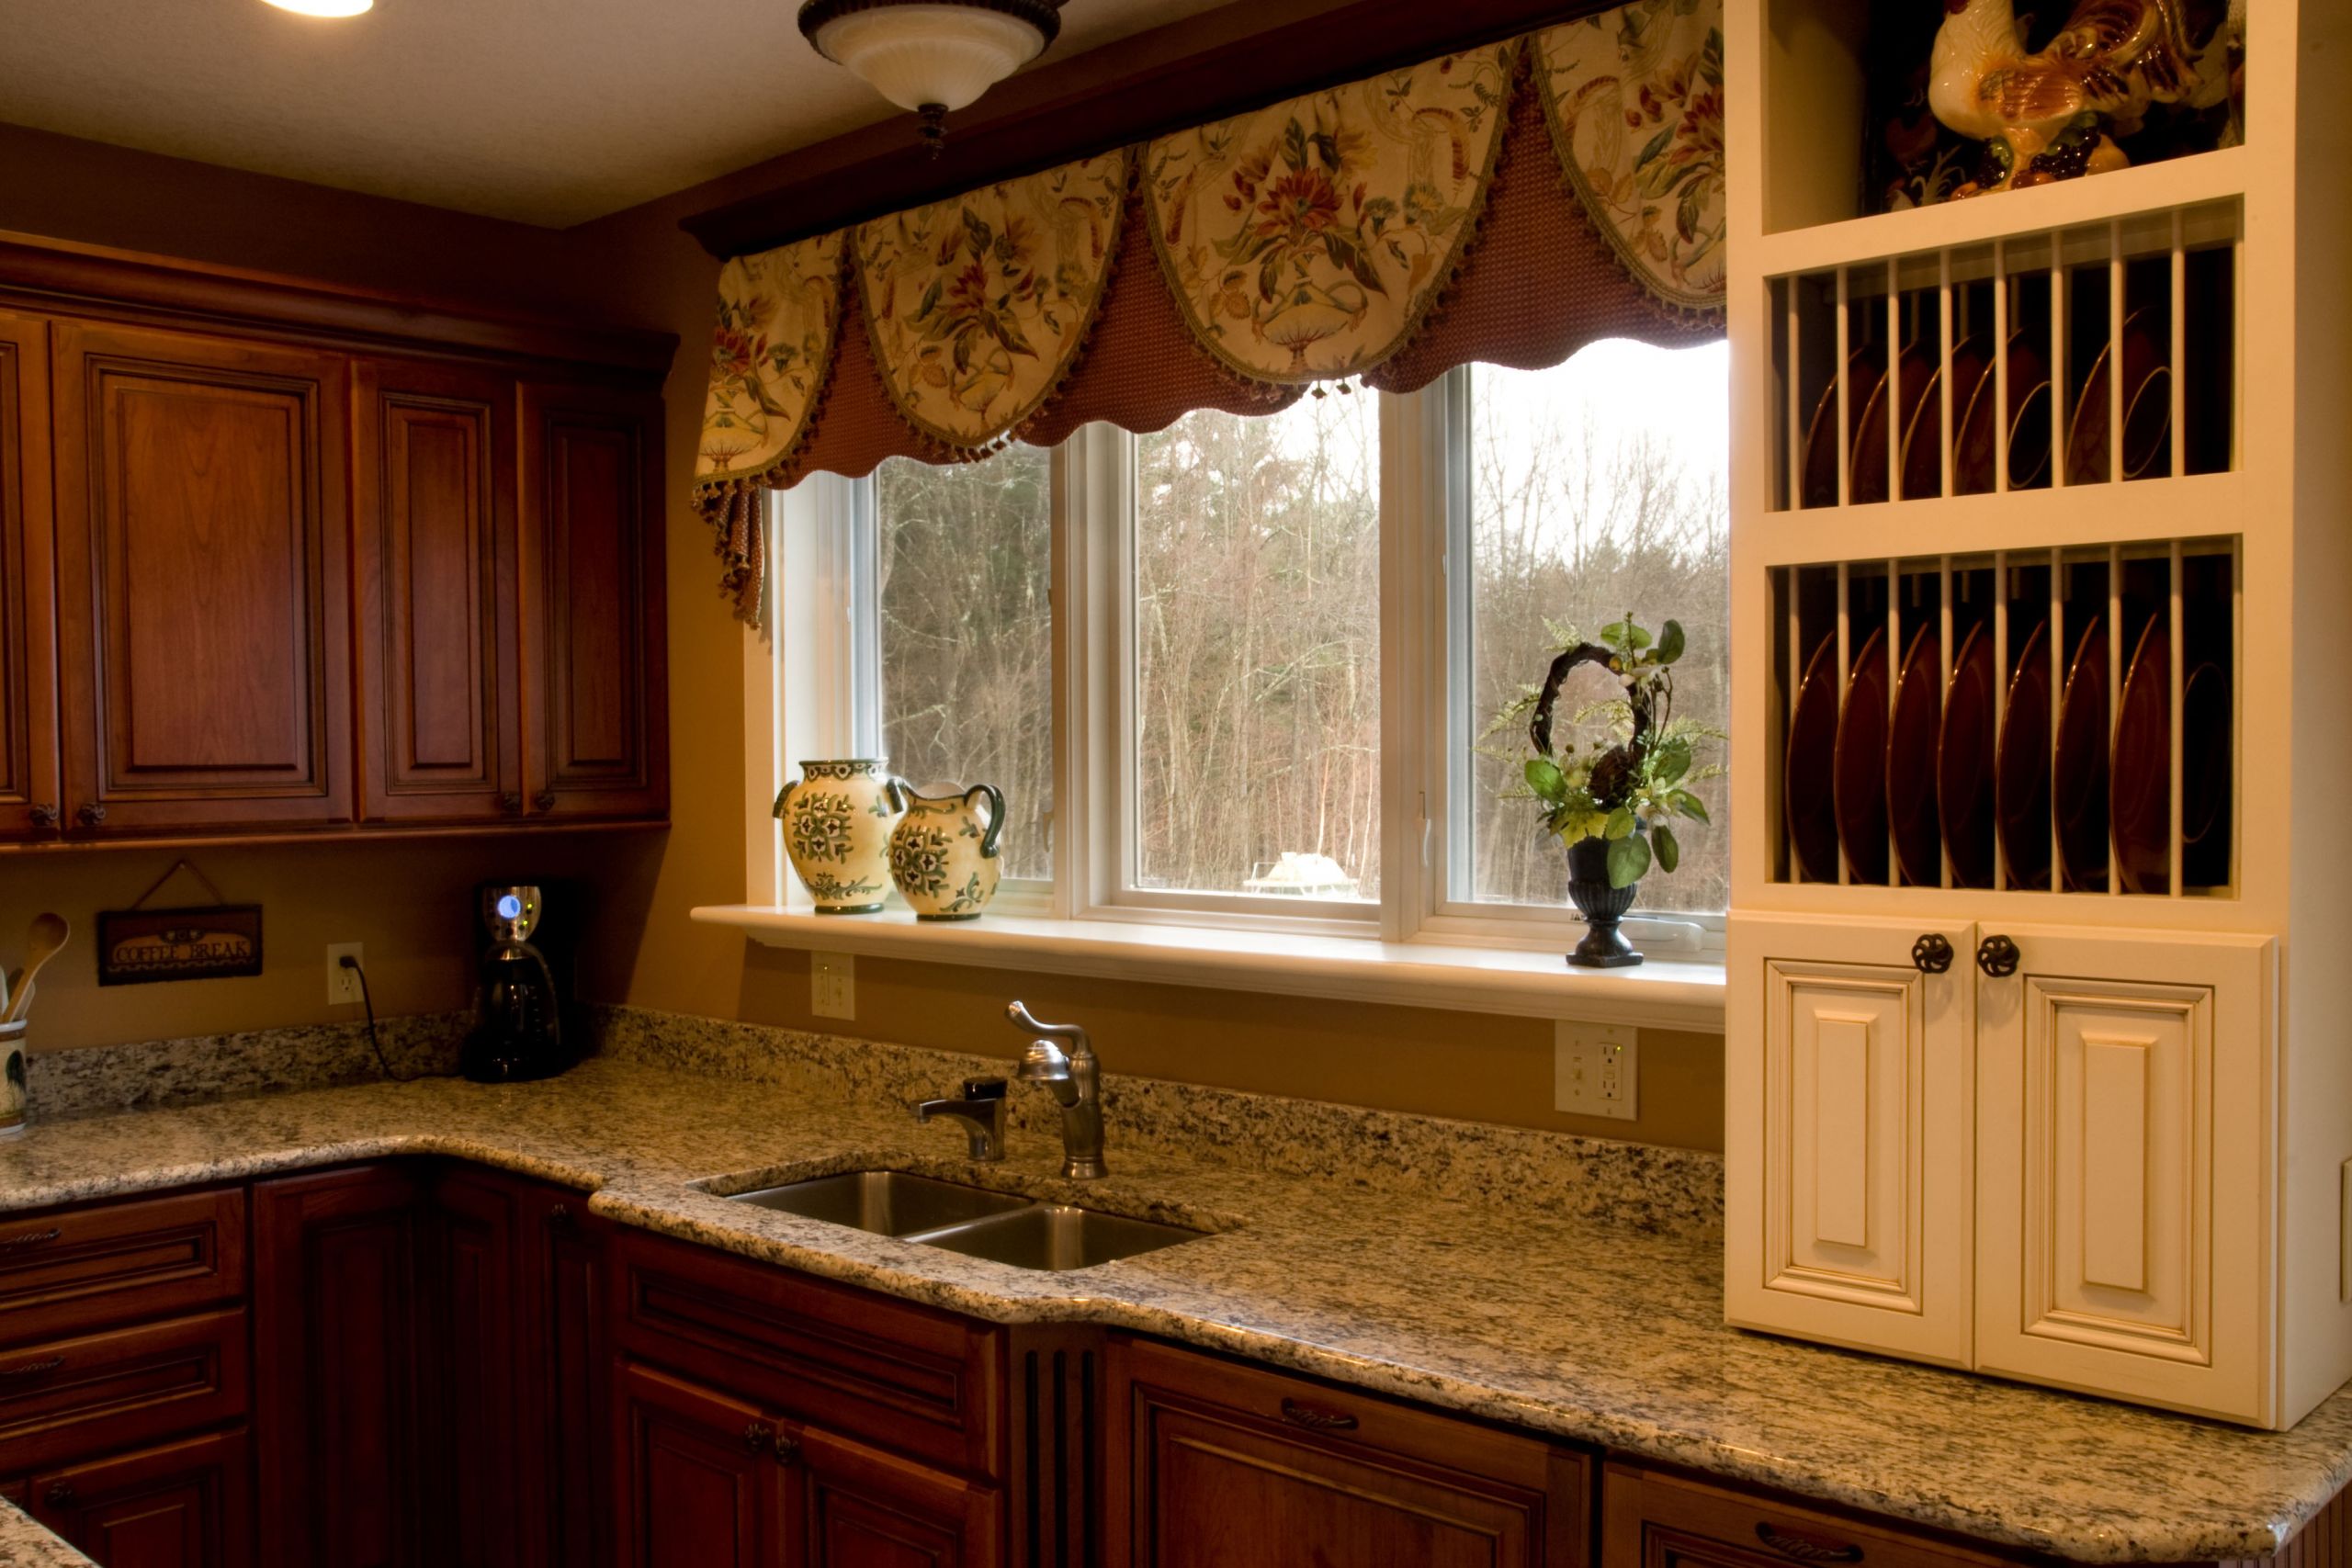 Kitchen Door Window Curtains
 Window Treatments for Small Windows in Kitchen – HomesFeed